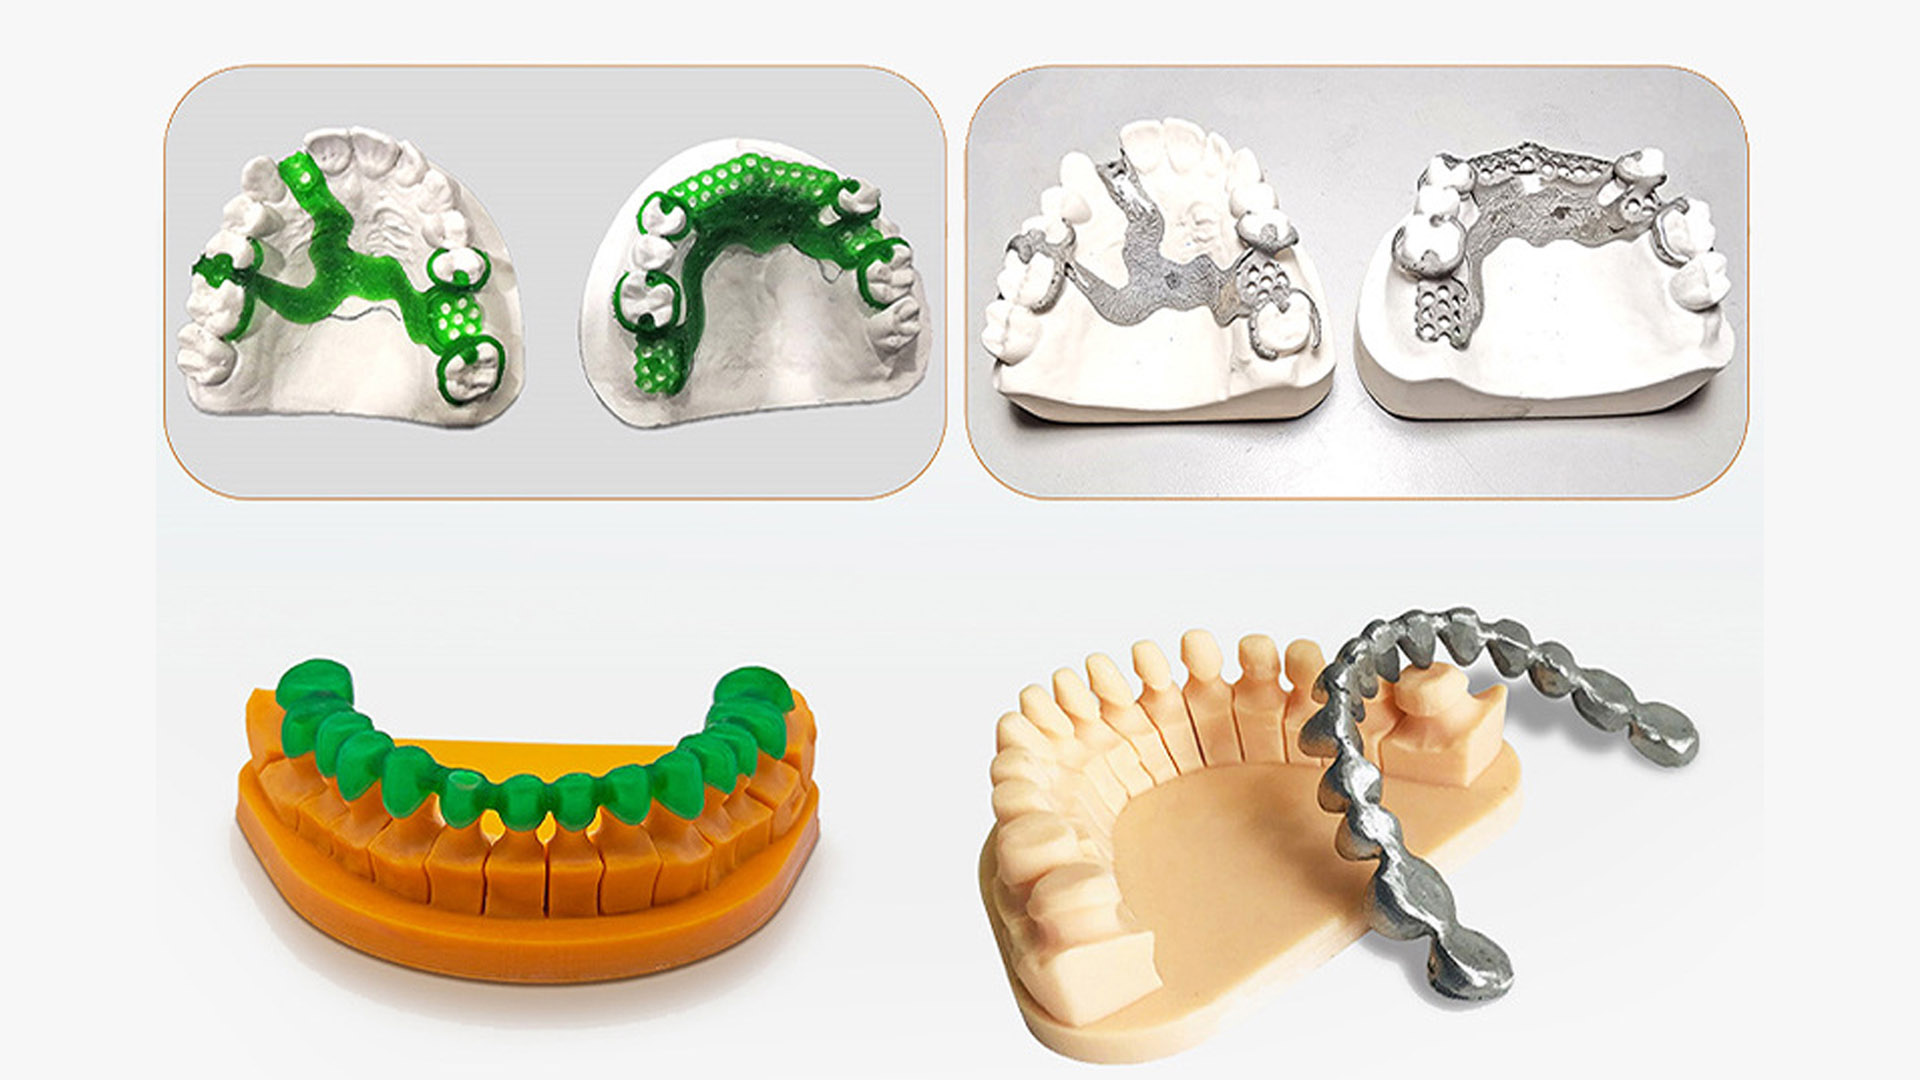 ACME 8K 10.1-inch dental 3D printing helps digital upgrade in the field of dental casting